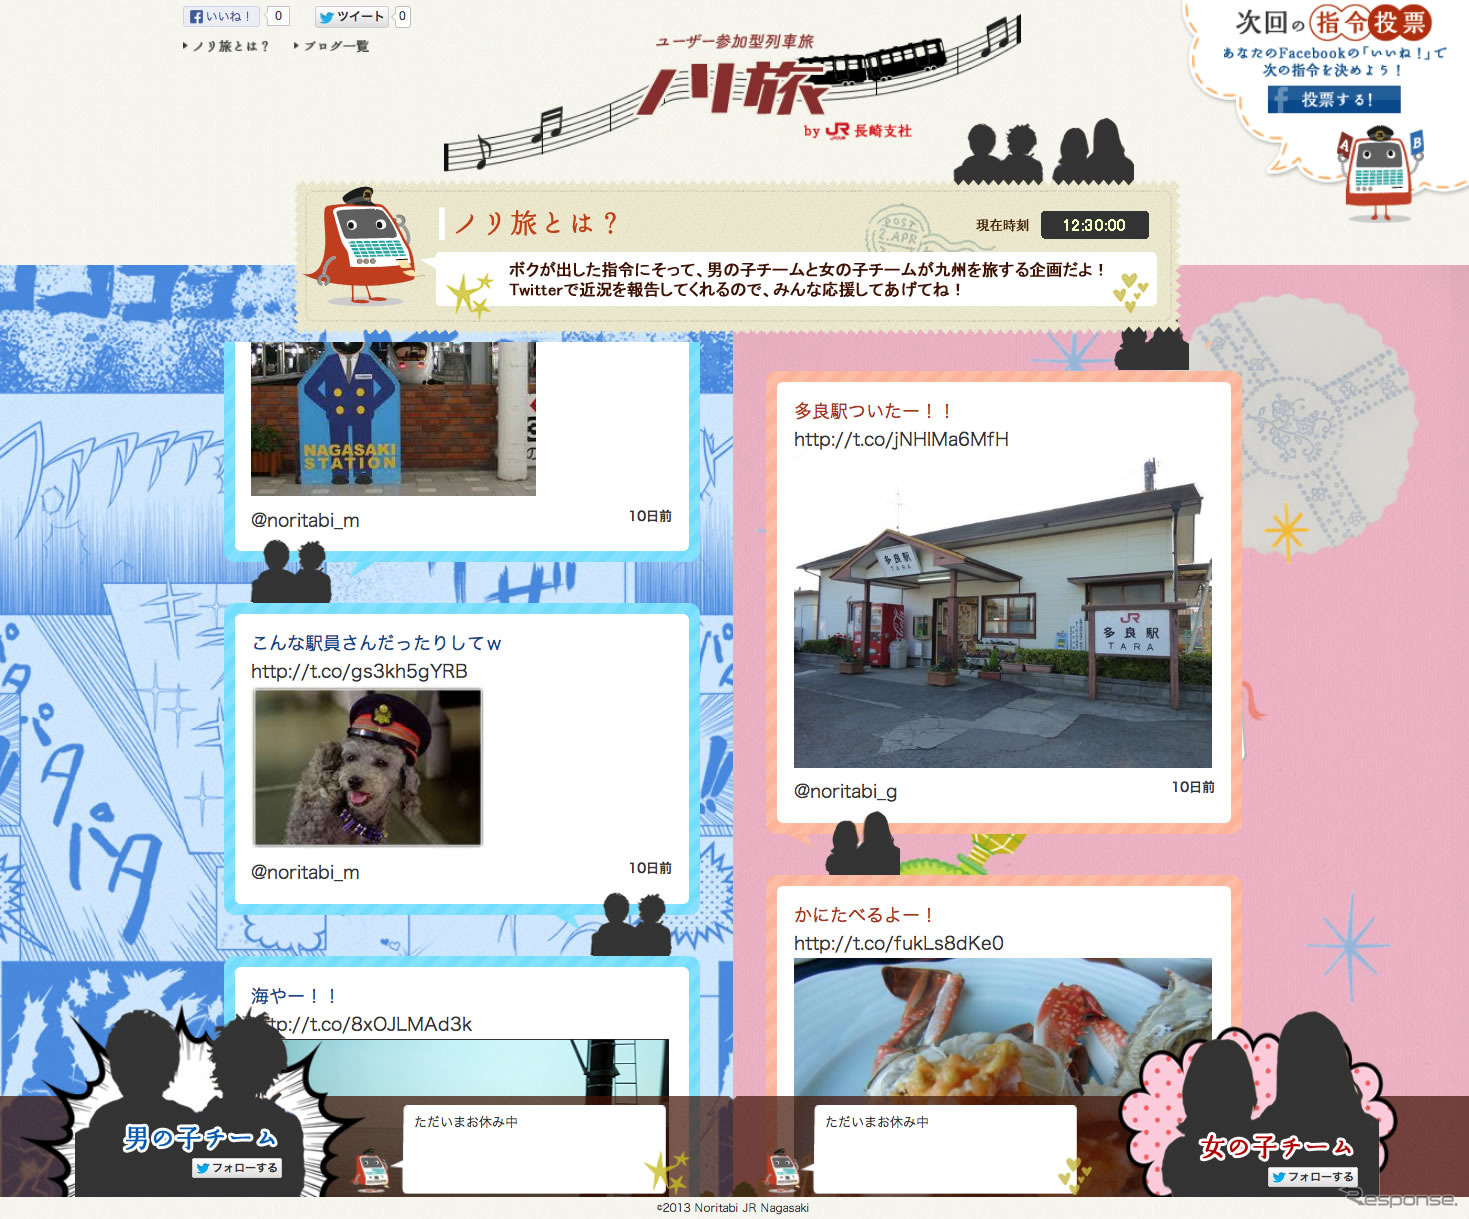 JR九州、ユーザー参加型の鉄道旅行企画「ノリ旅」実施…旅行者を公募